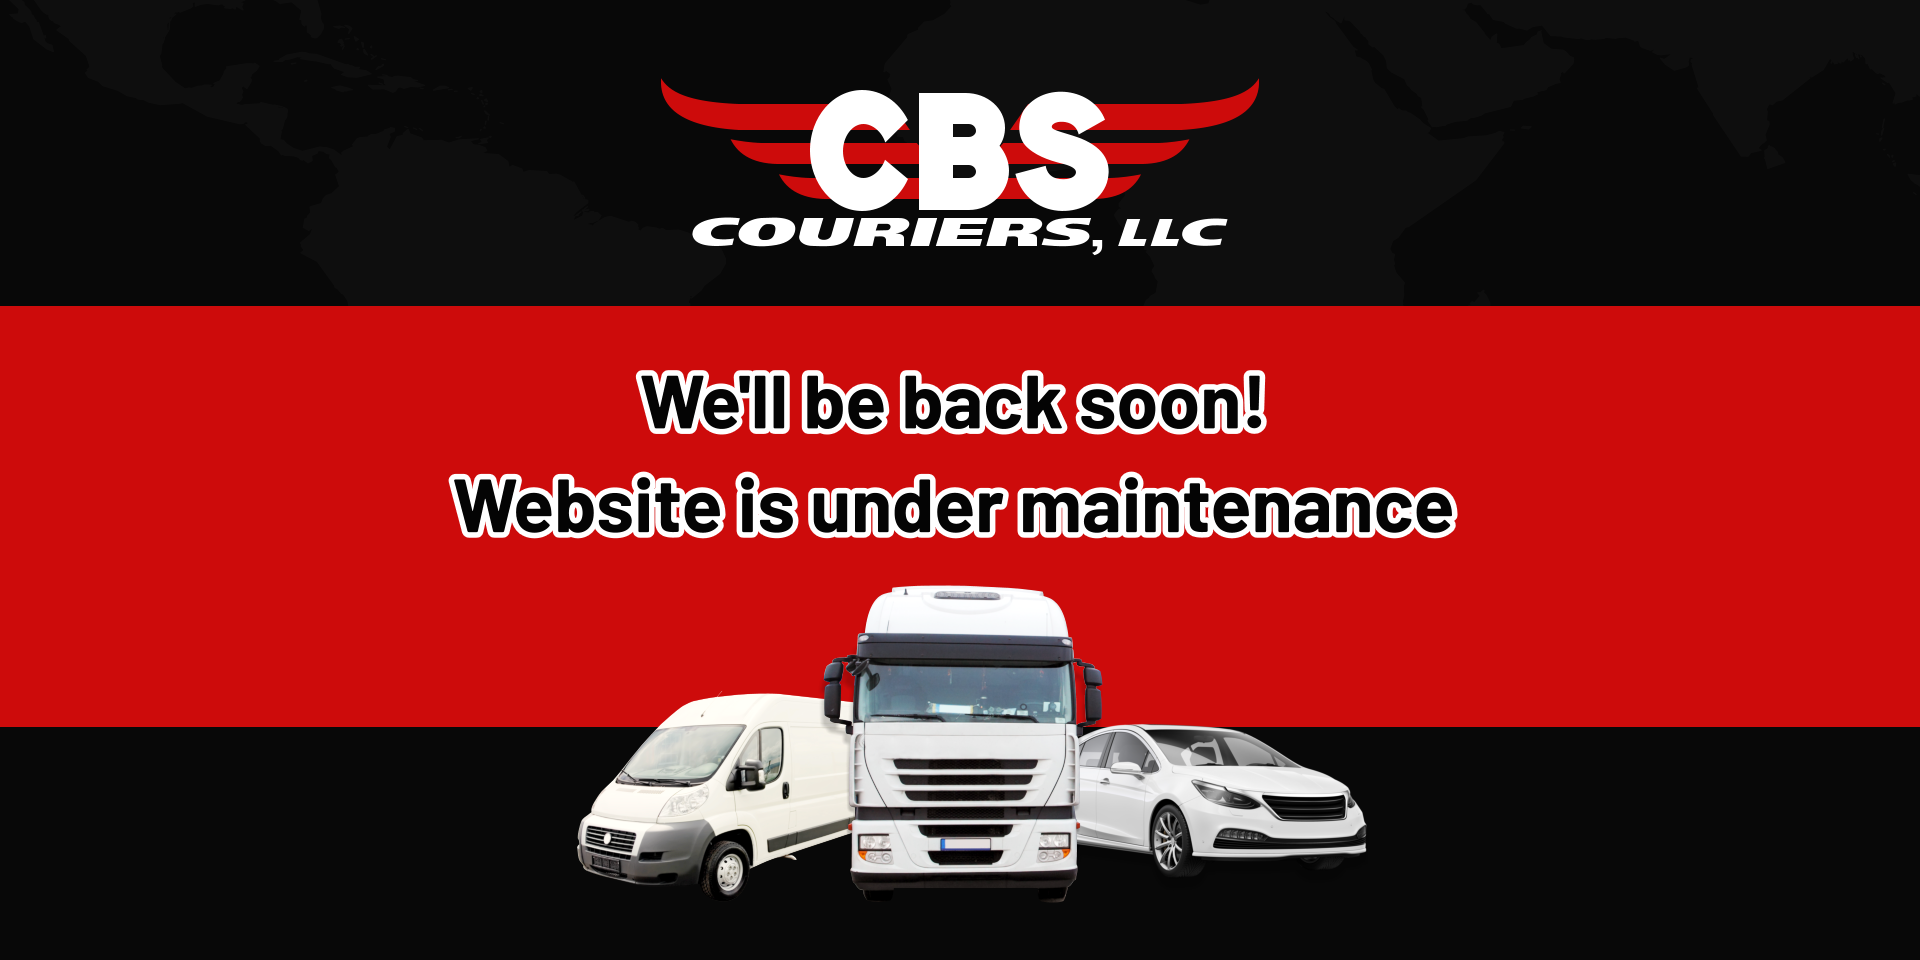 We'll be back soon! Website is under maintenance